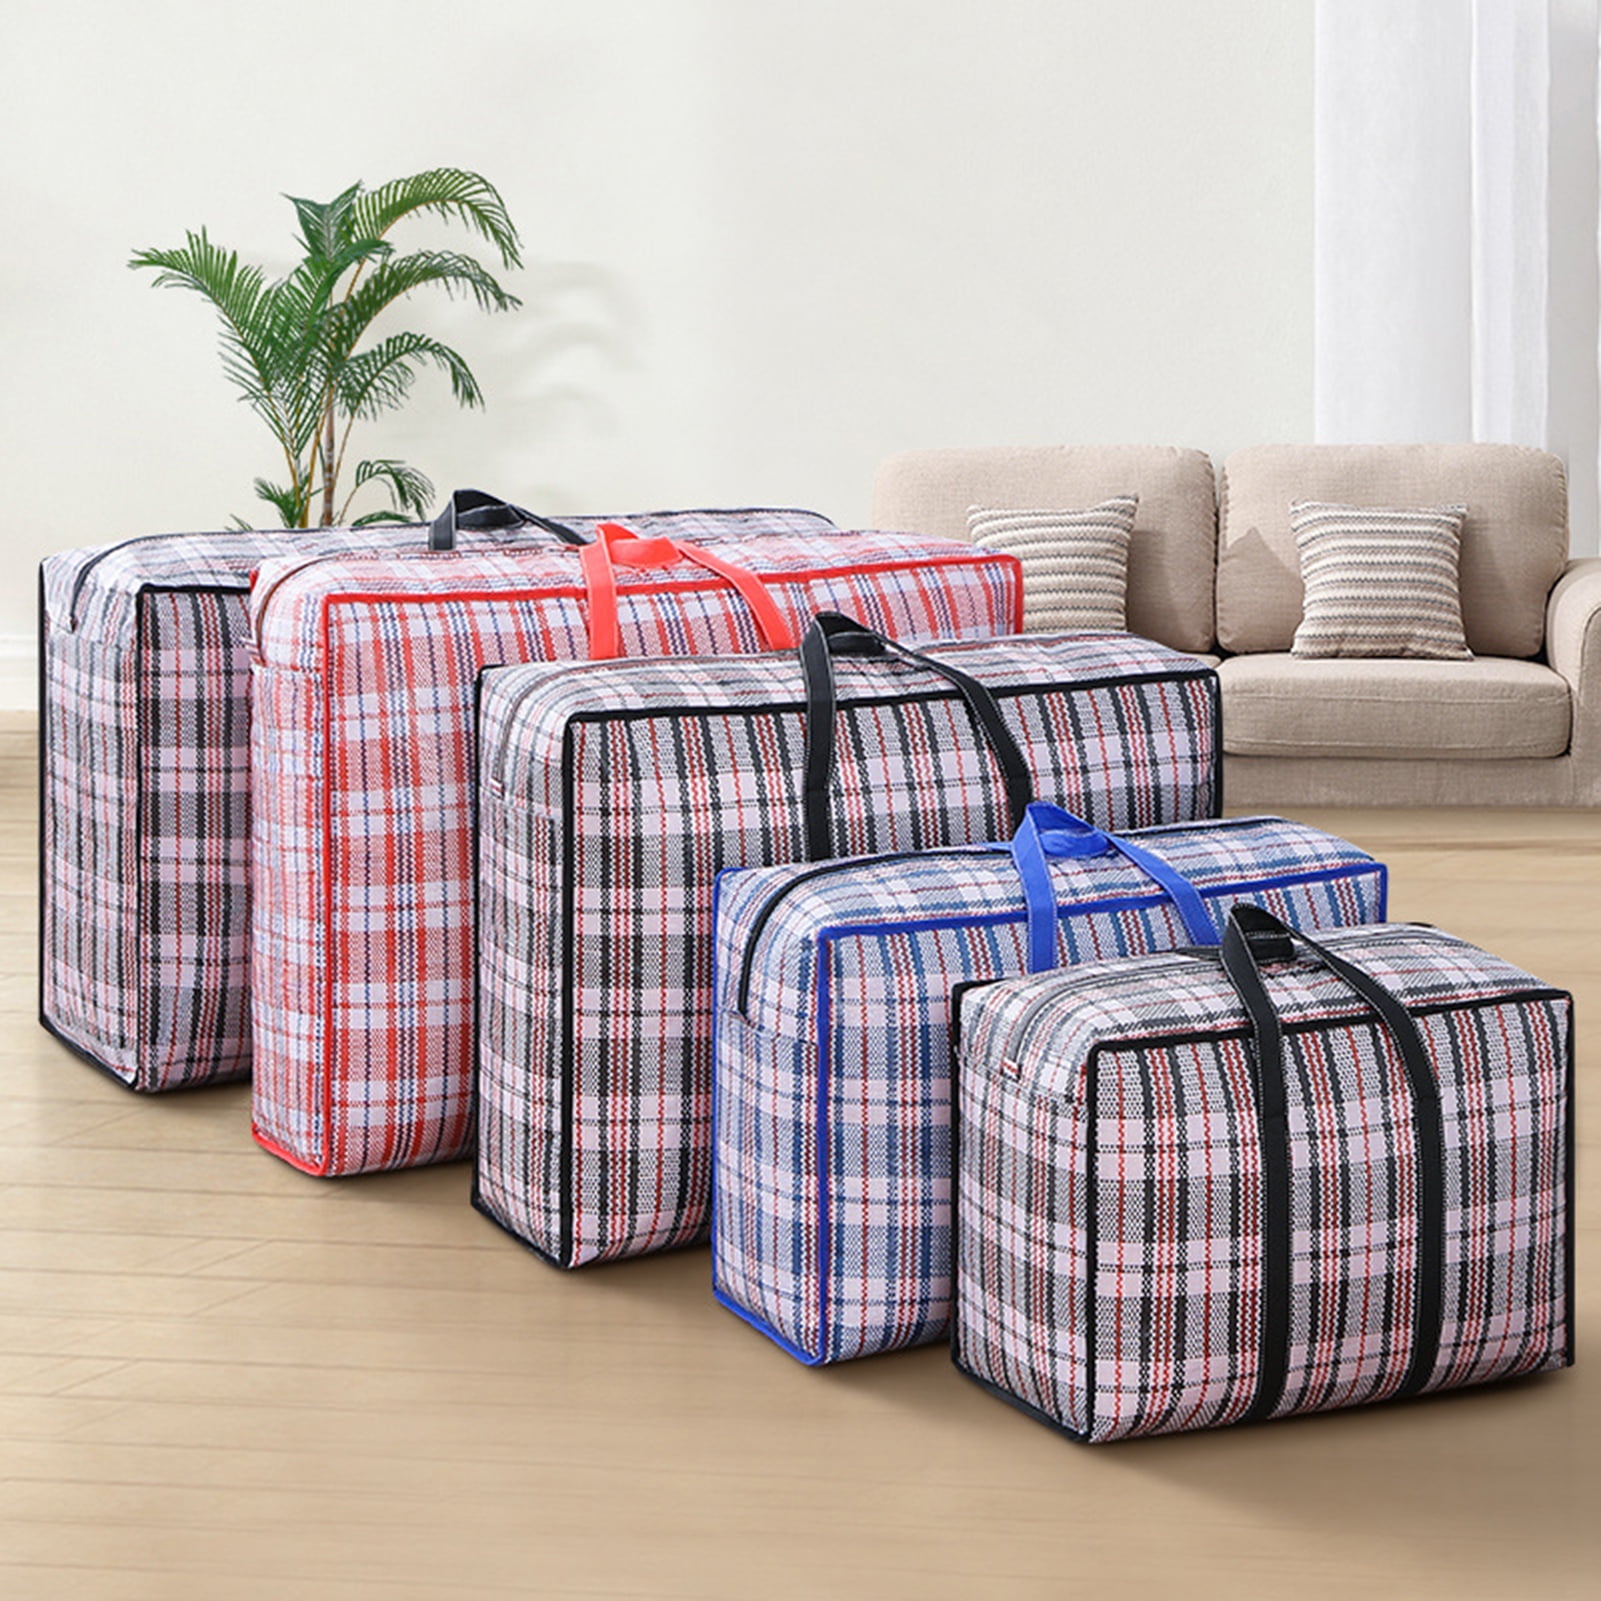 Quilt Storage Bag - Lightweight & Breathable - 22X15X8